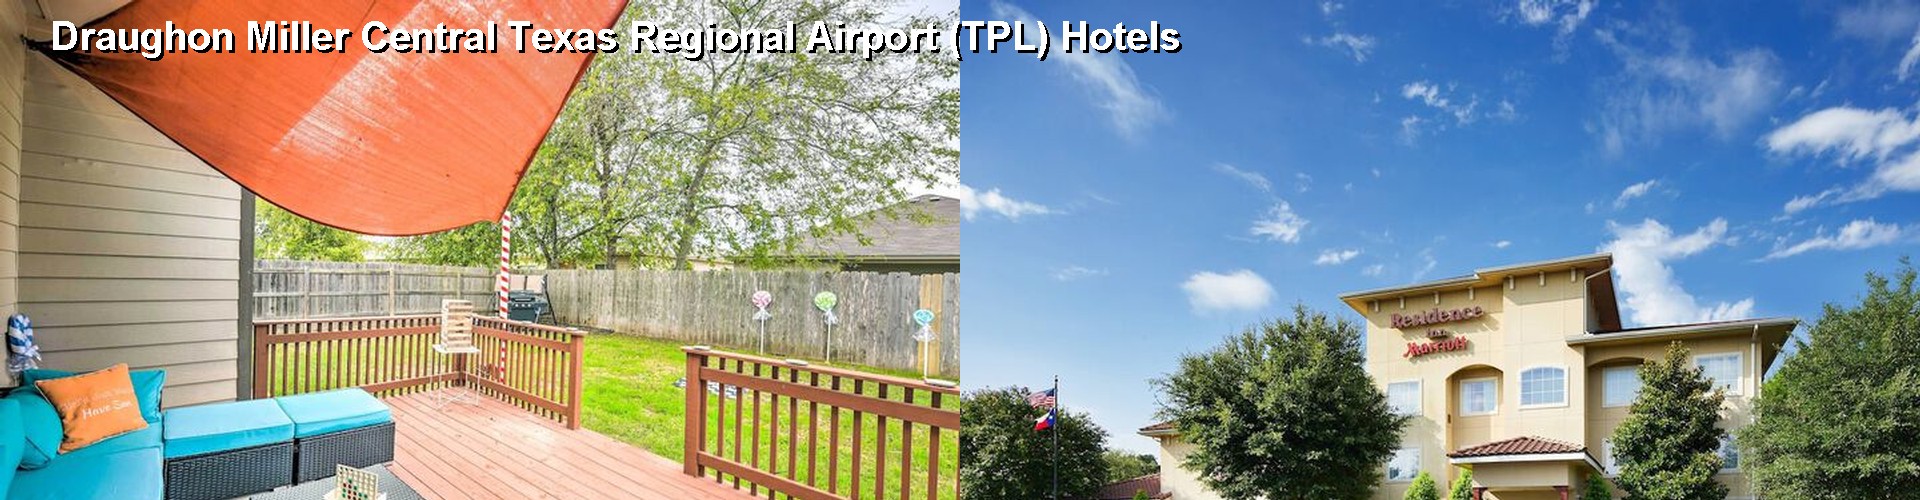 3 Best Hotels near Draughon Miller Central Texas Regional Airport (TPL)